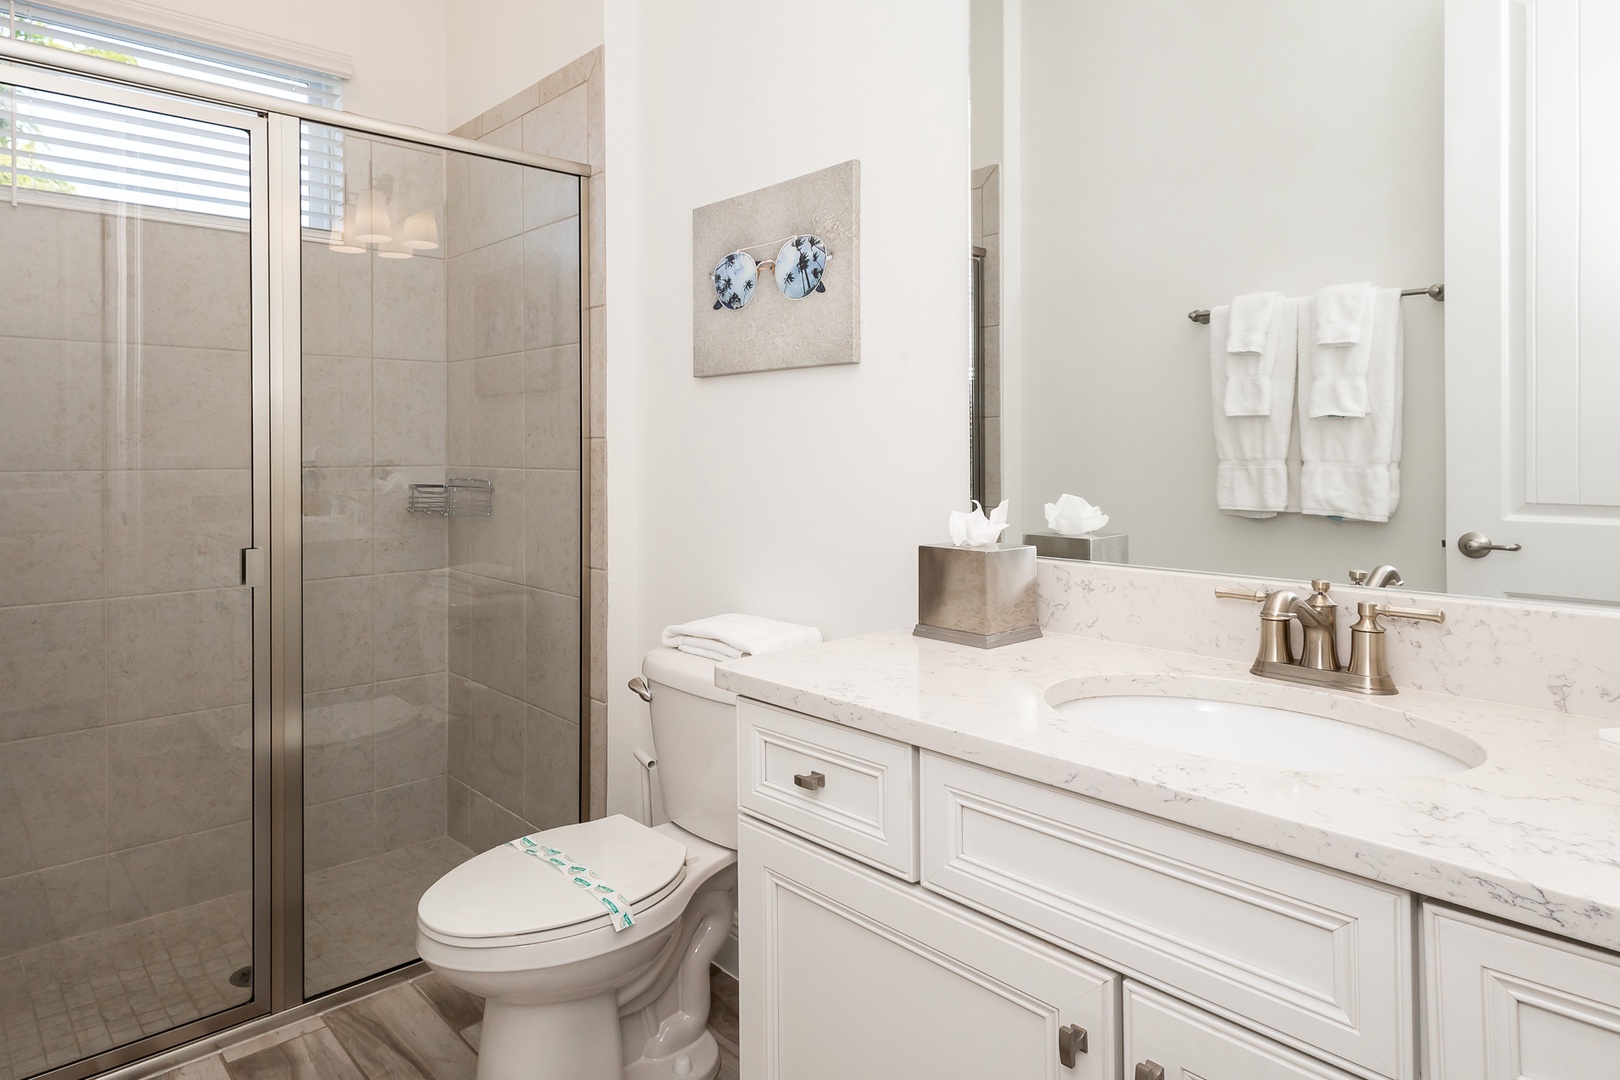 The 1st floor king en suite offers a beautiful single vanity & glass shower